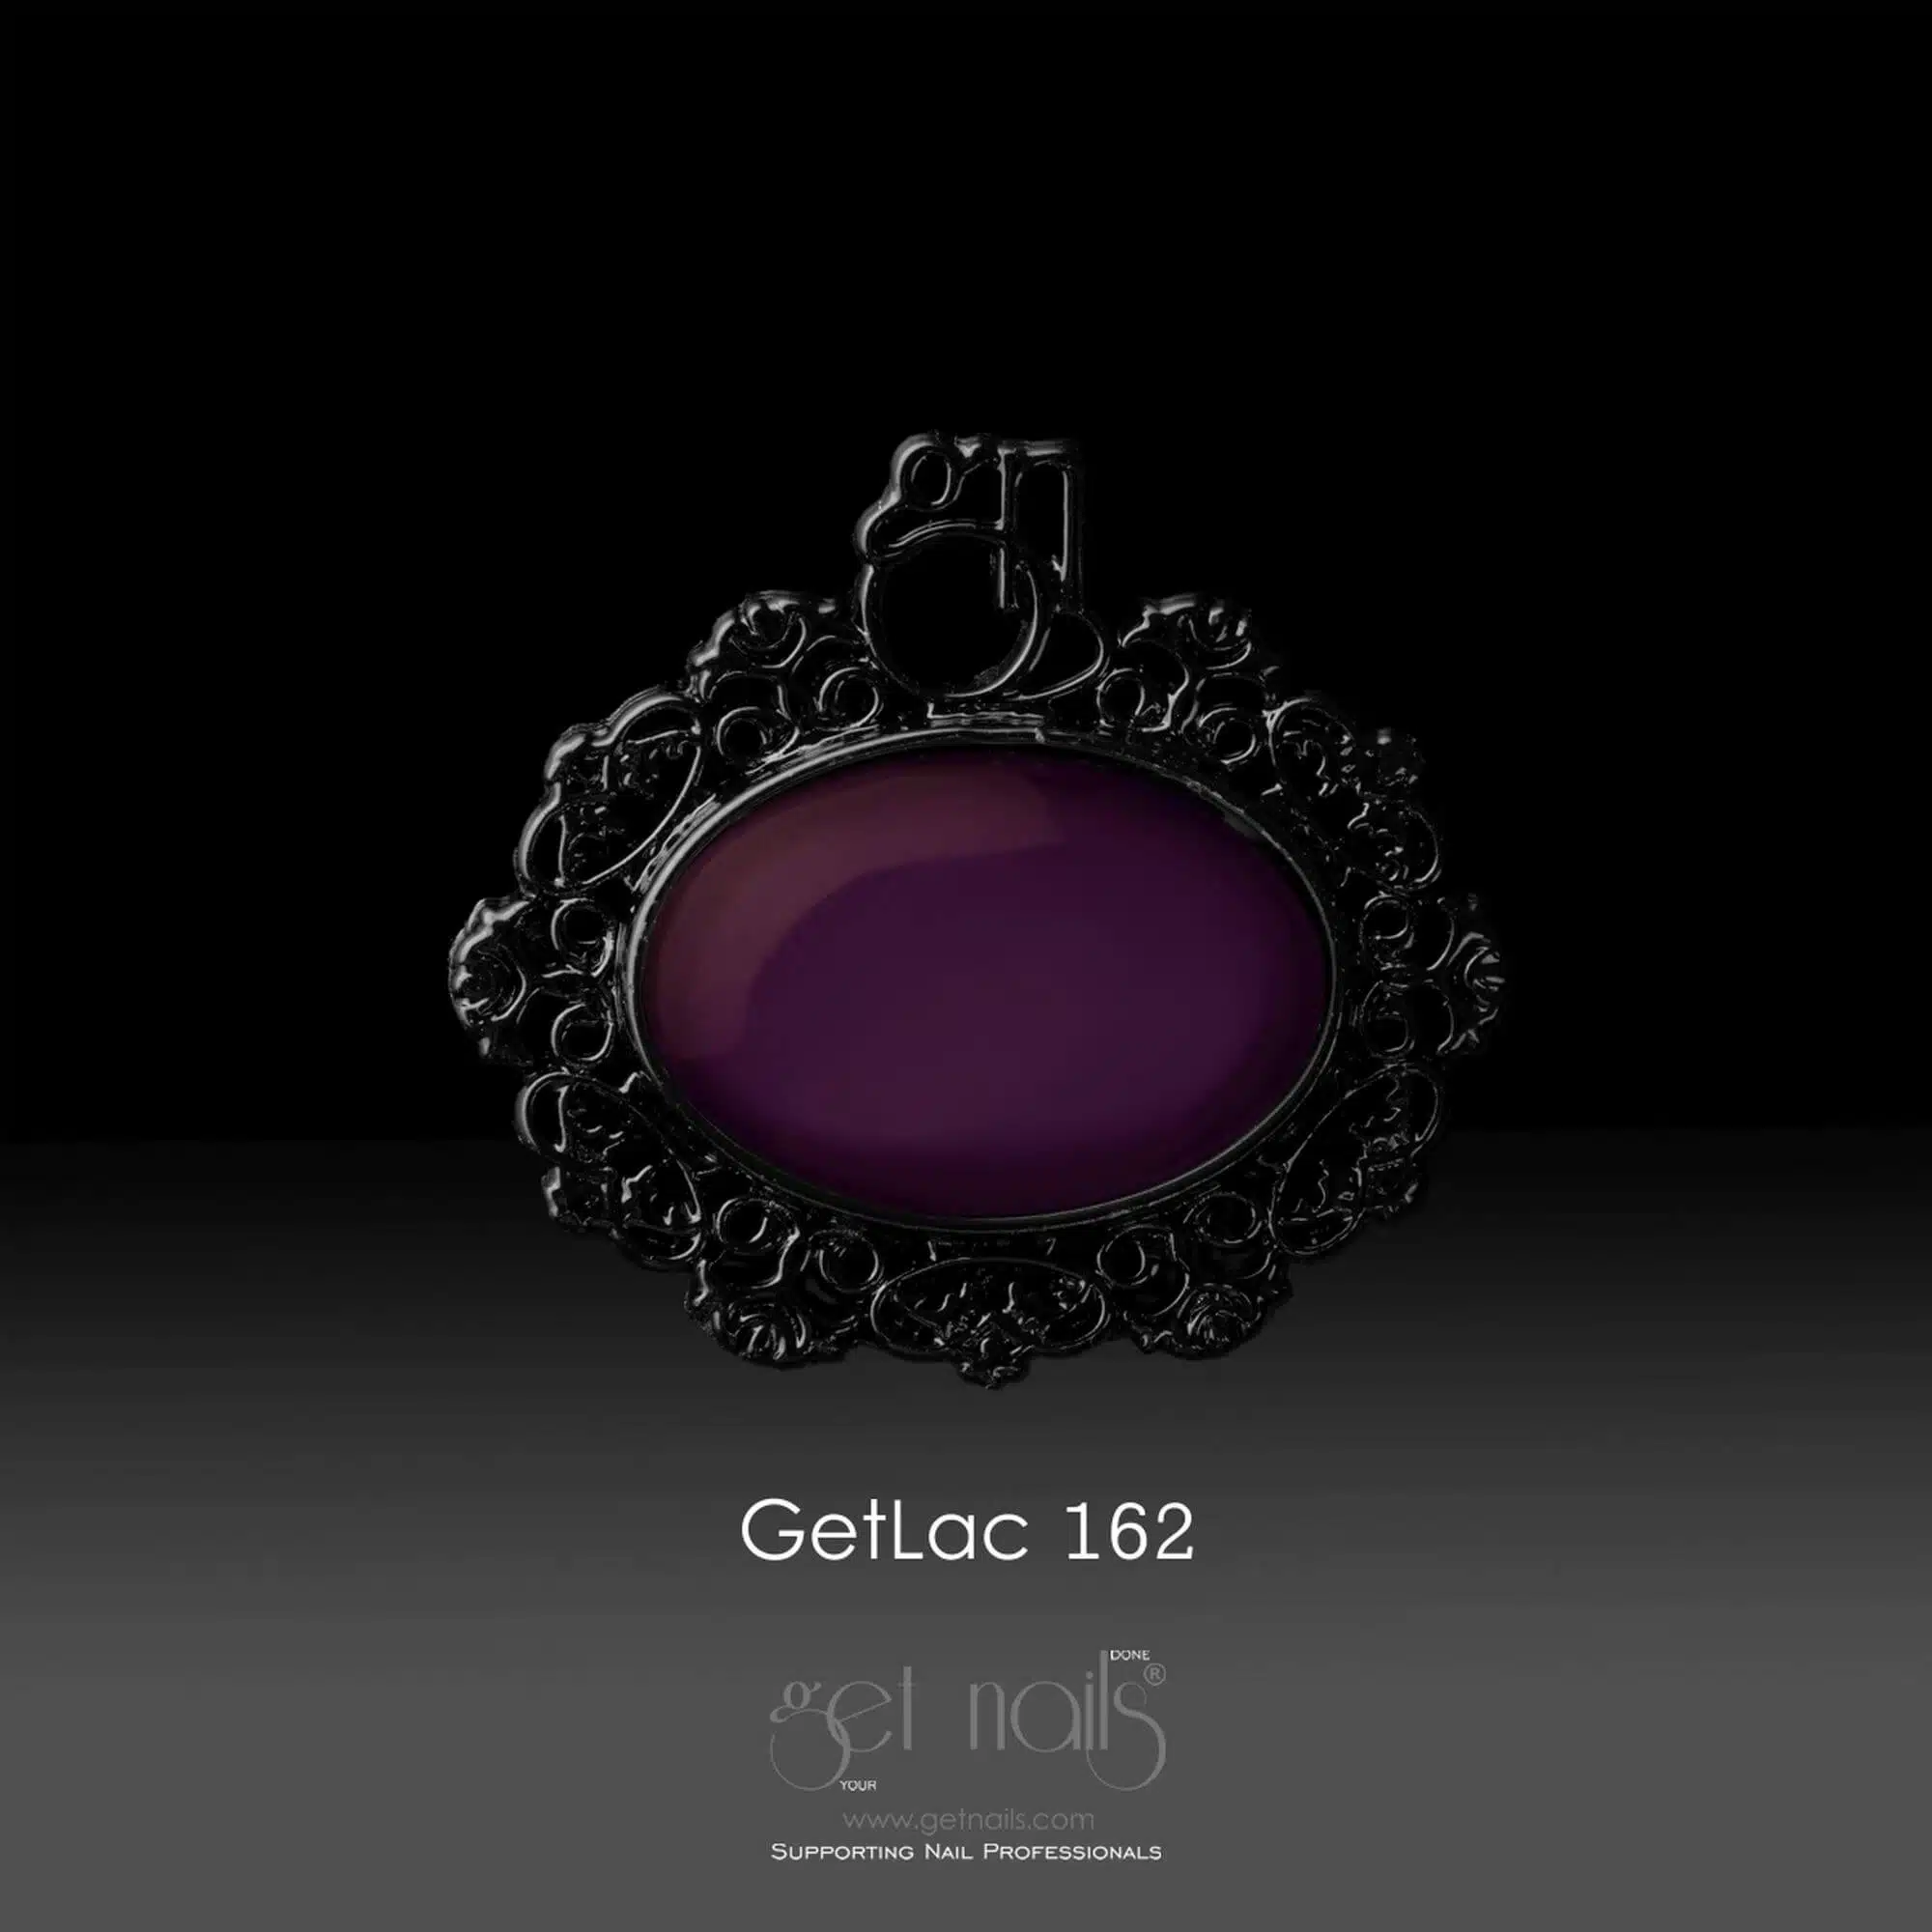 Ottieni Nails Austria - GetLac 162 15g